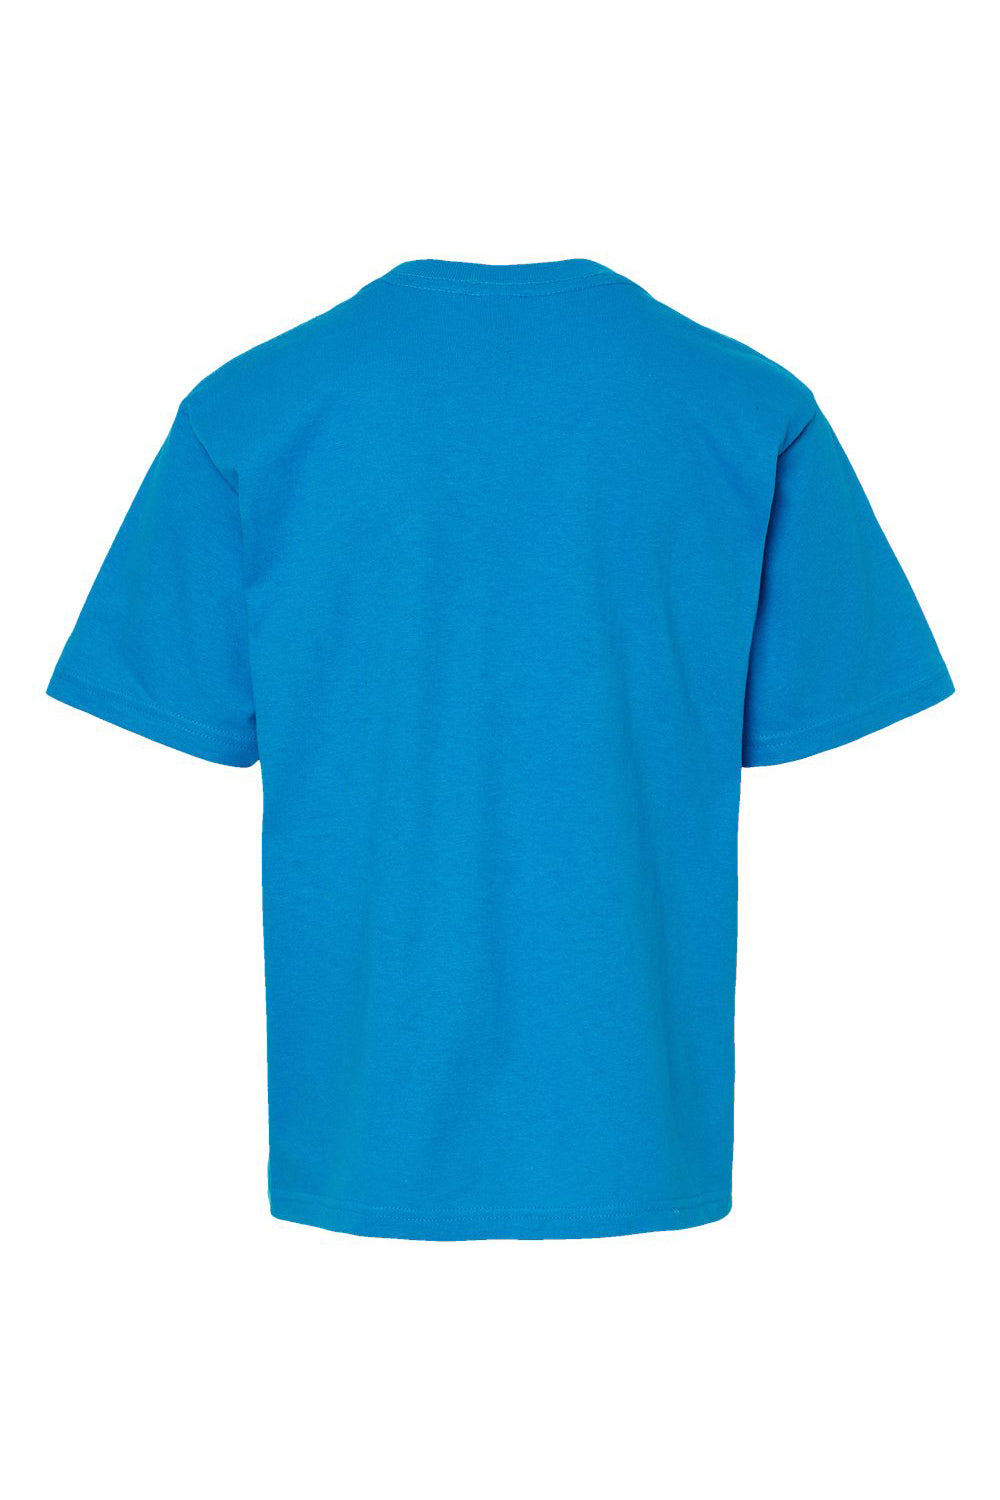 M&O 4850 Youth Gold Soft Touch Short Sleeve Crewneck T-Shirt Turquoise Blue Flat Back